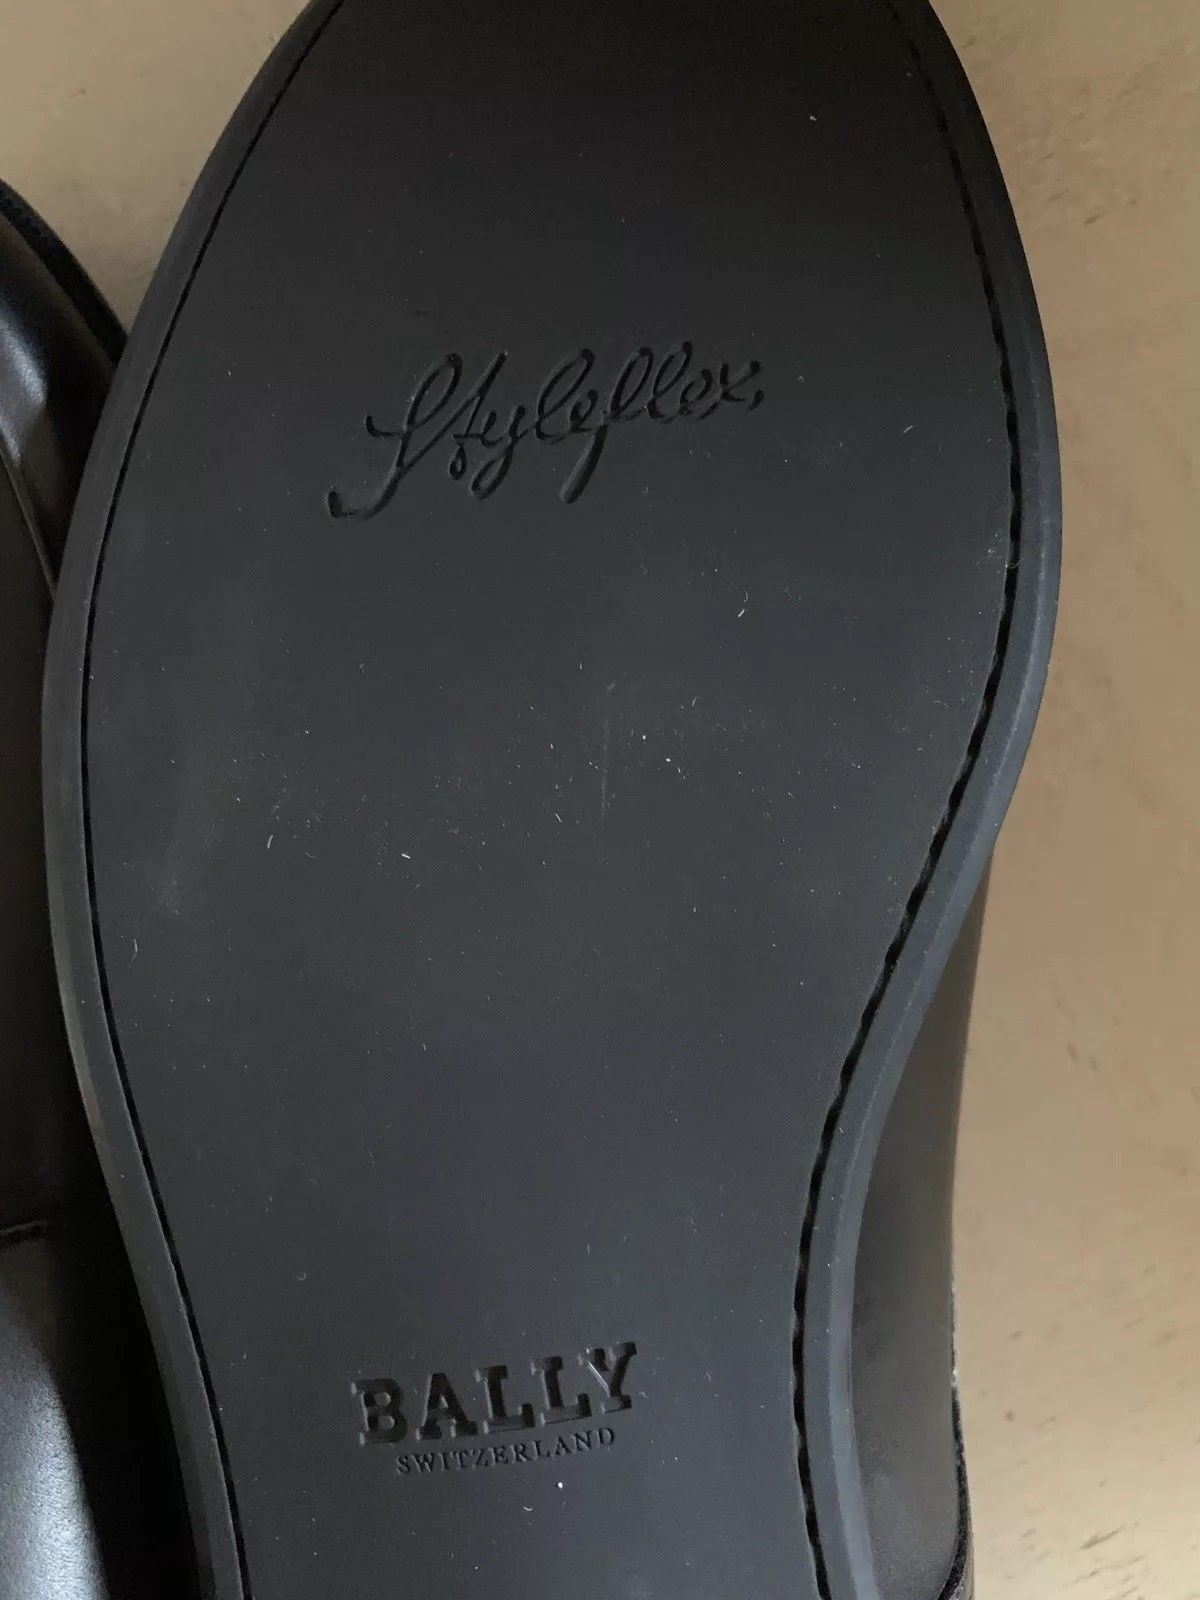 New $735 Bally Men Haldo Leather Oxford Shoes Black 11.5 US Switzerland